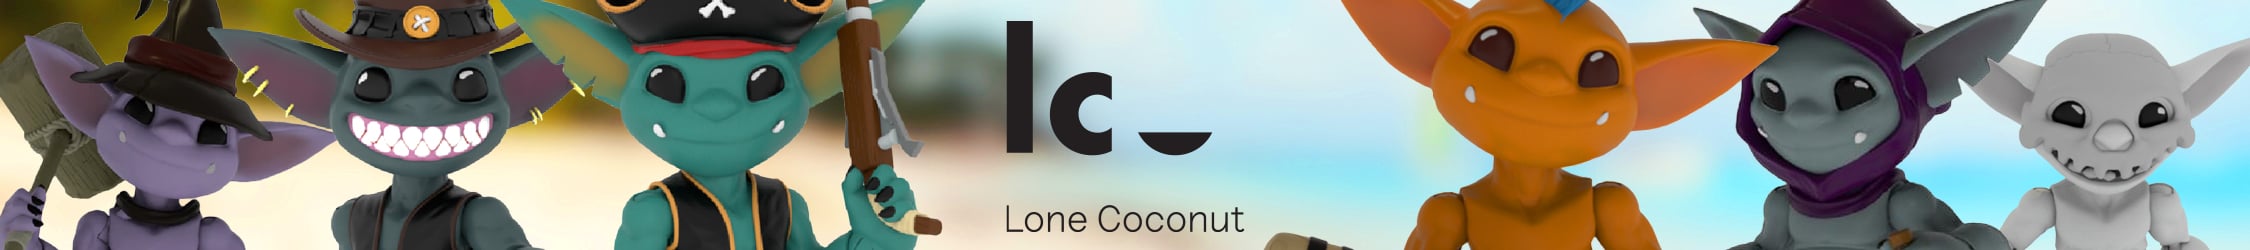 Lone Coconut